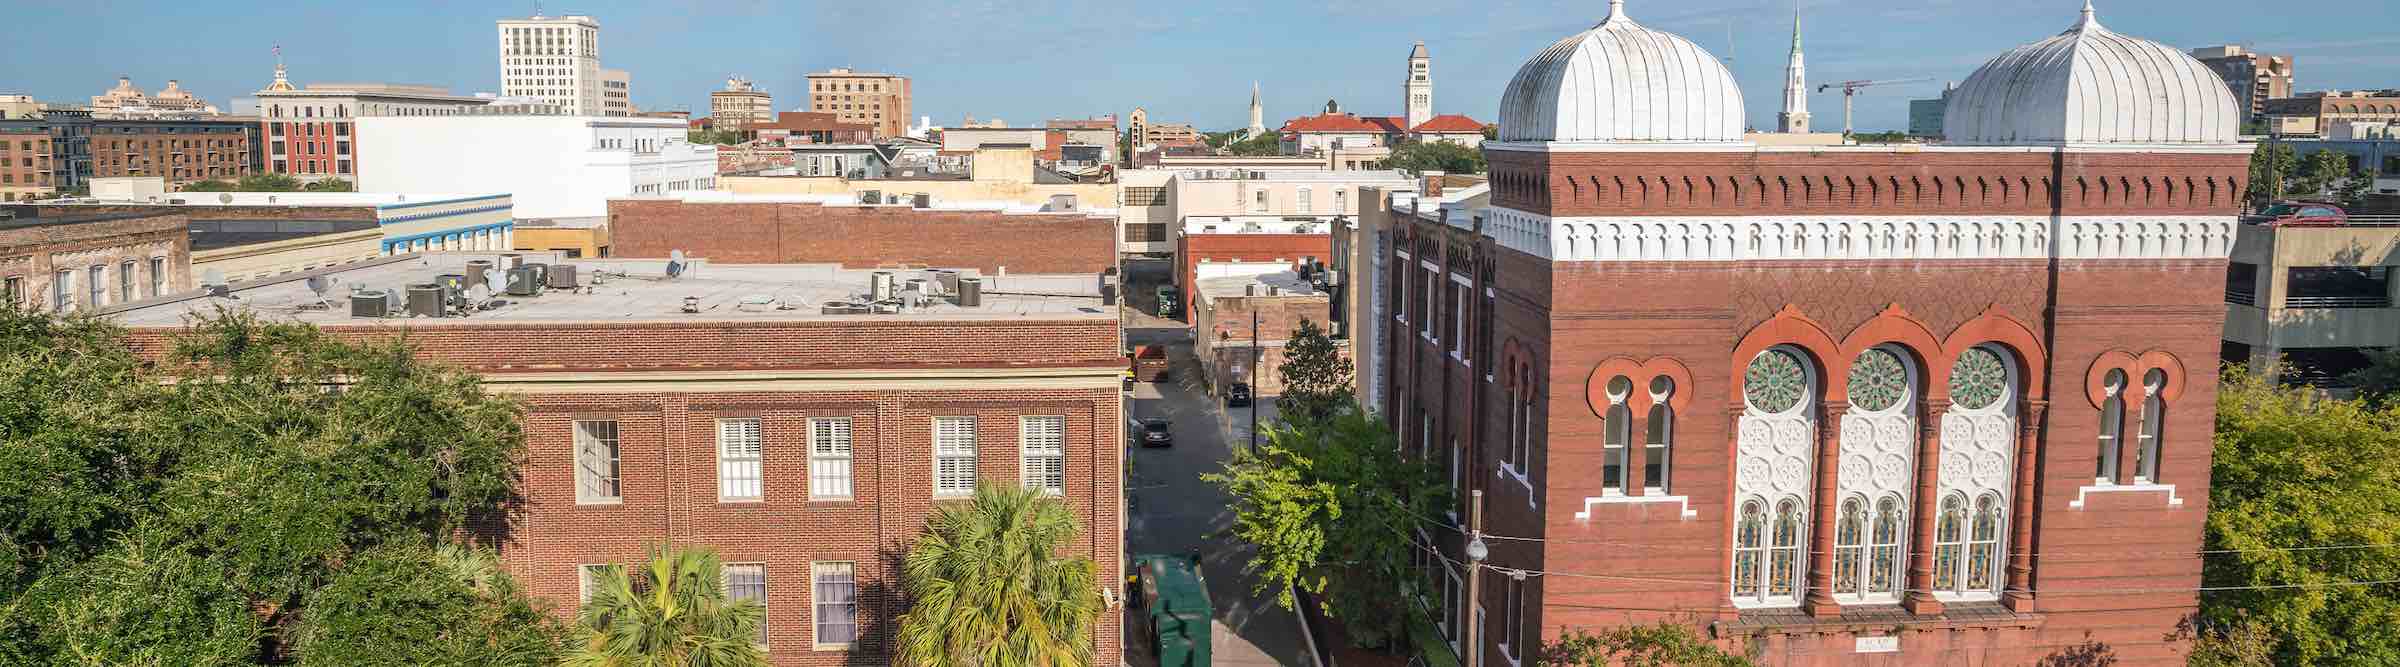 View of Montgomery Street, Savannah, GA, with the former B'nai Brith Jacob Synagogue.